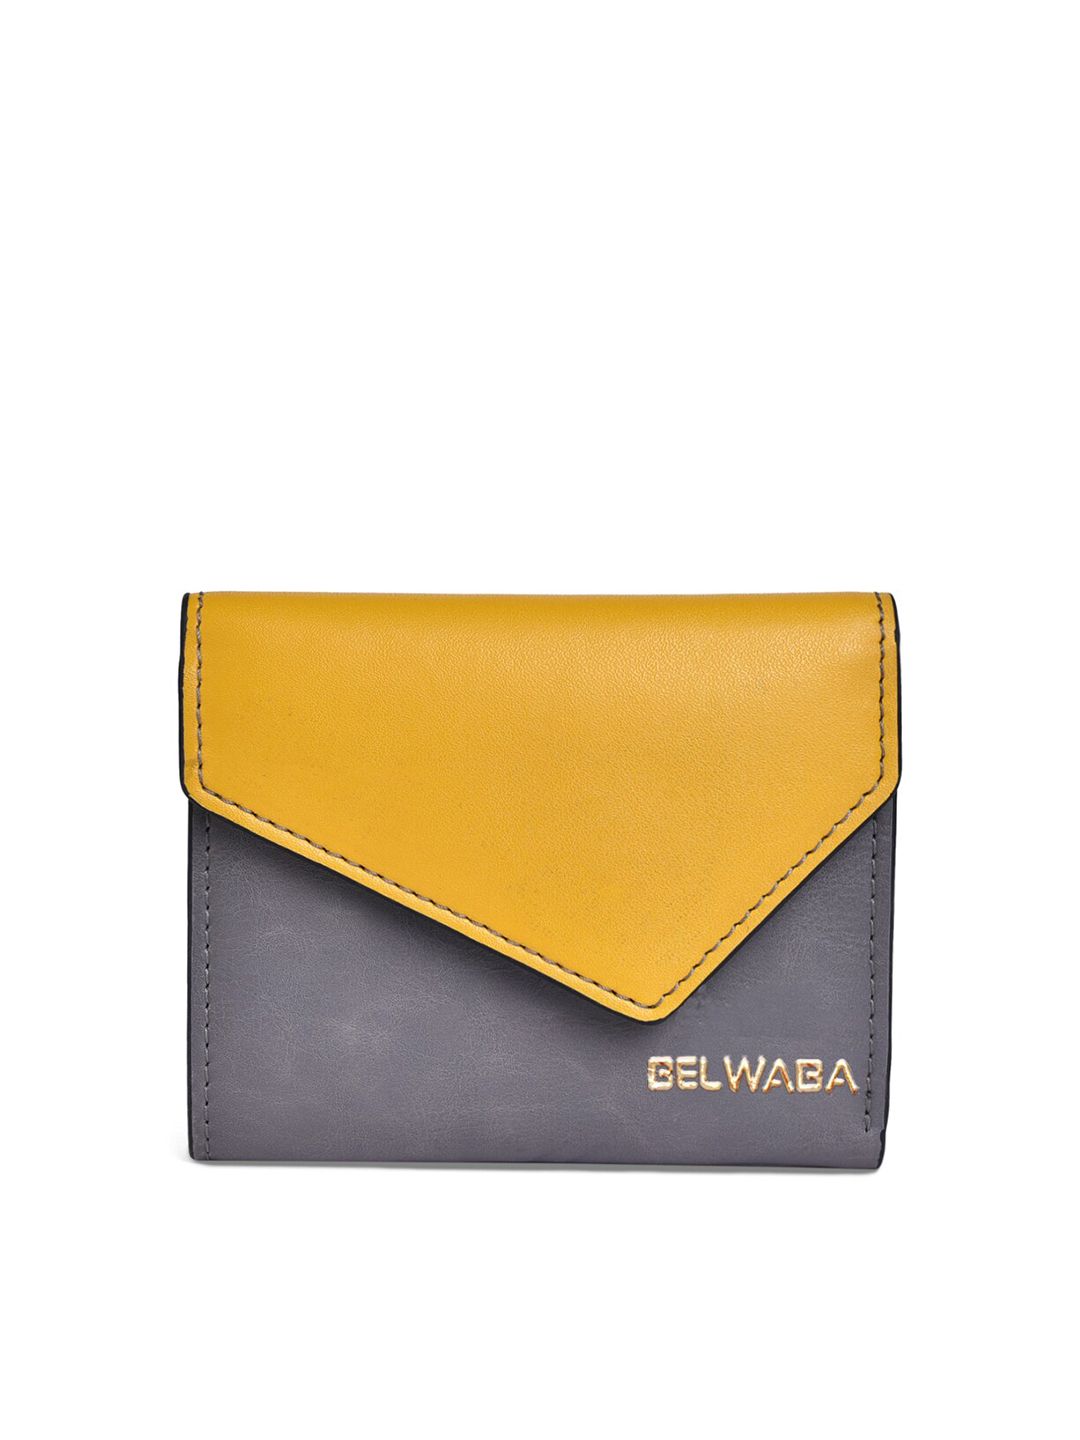 Belwaba Women Grey & Yellow Colourblocked PU Three Fold Wallet Price in India